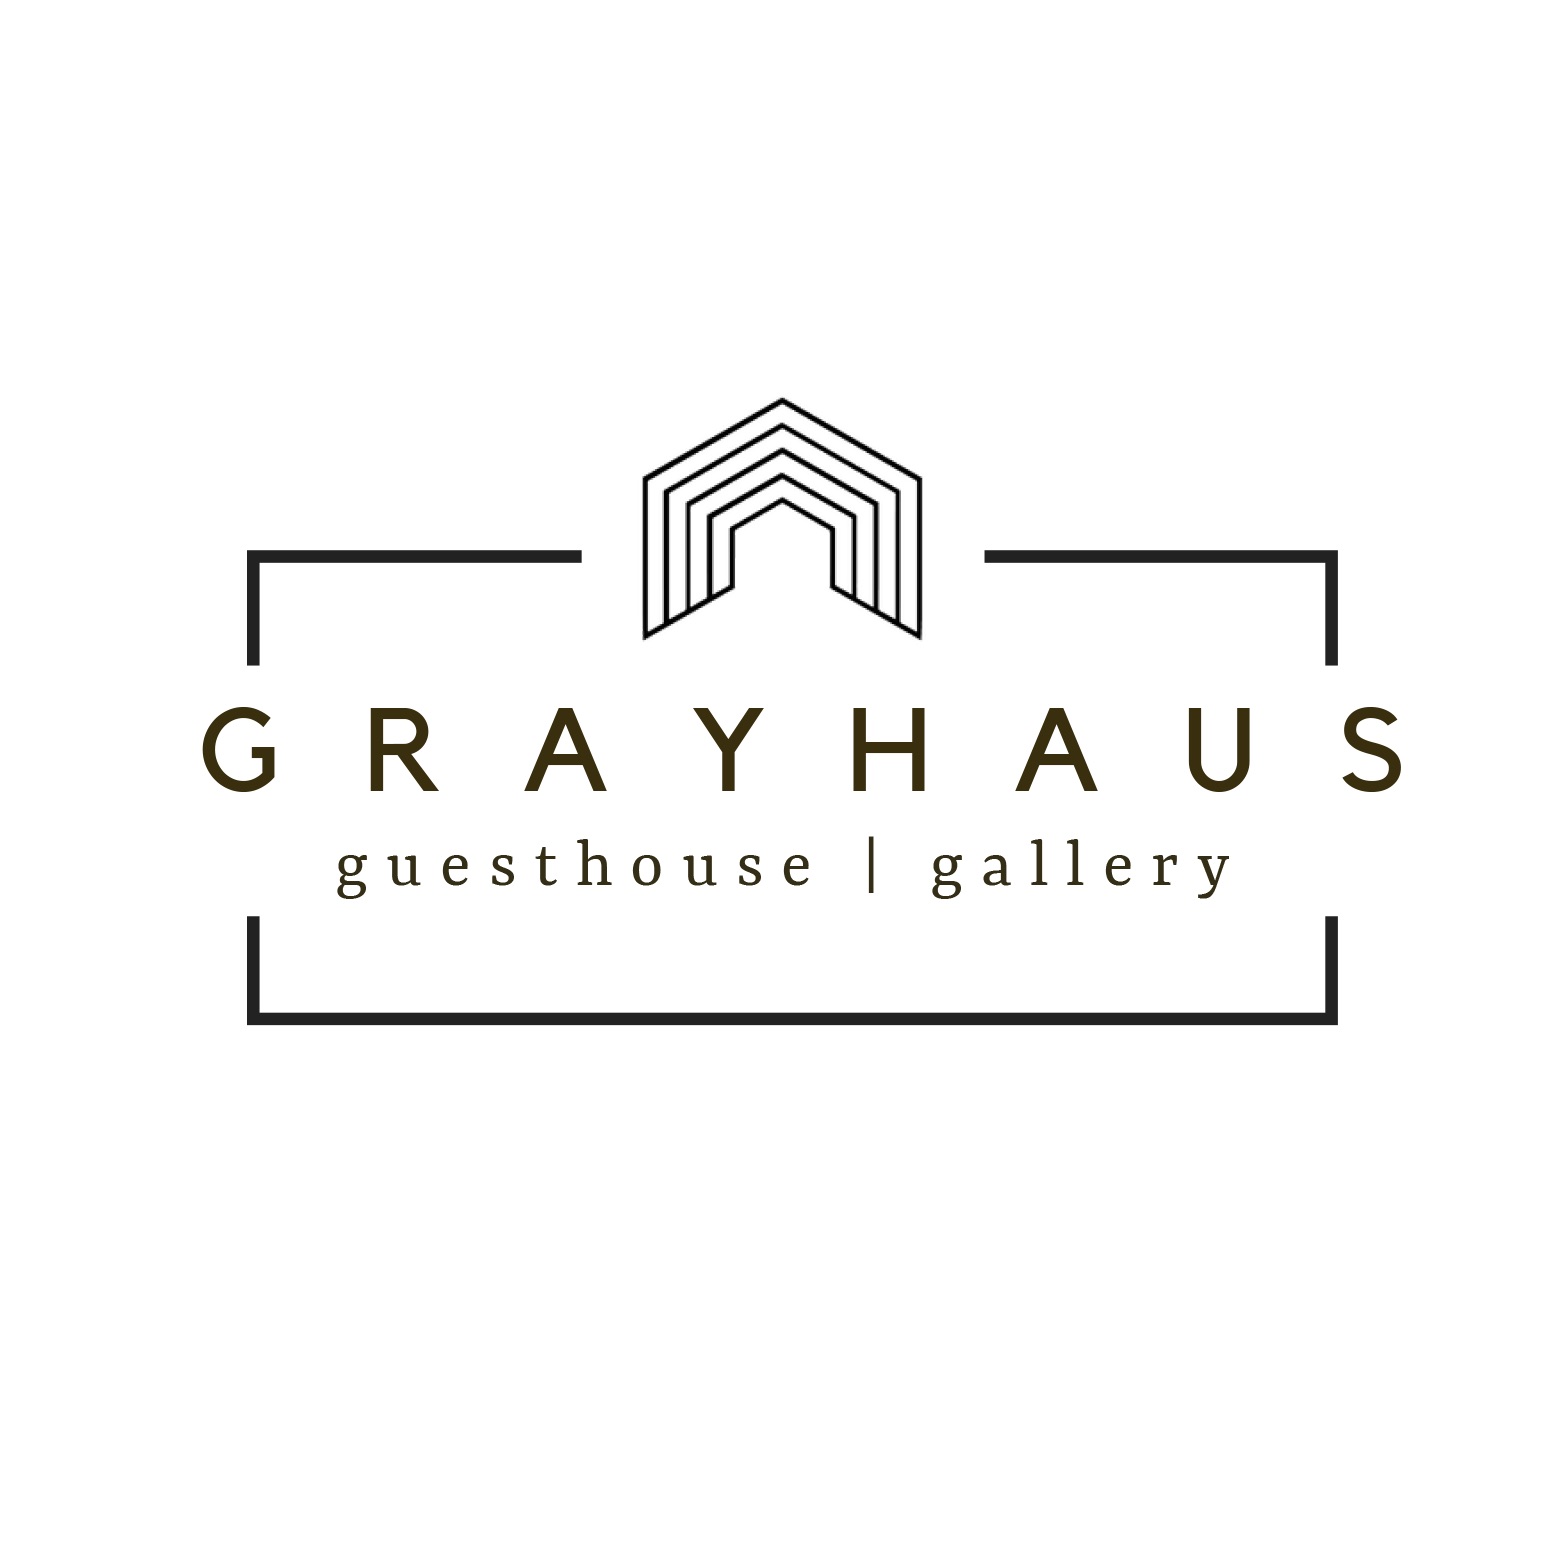 GRAYHAUS Logo